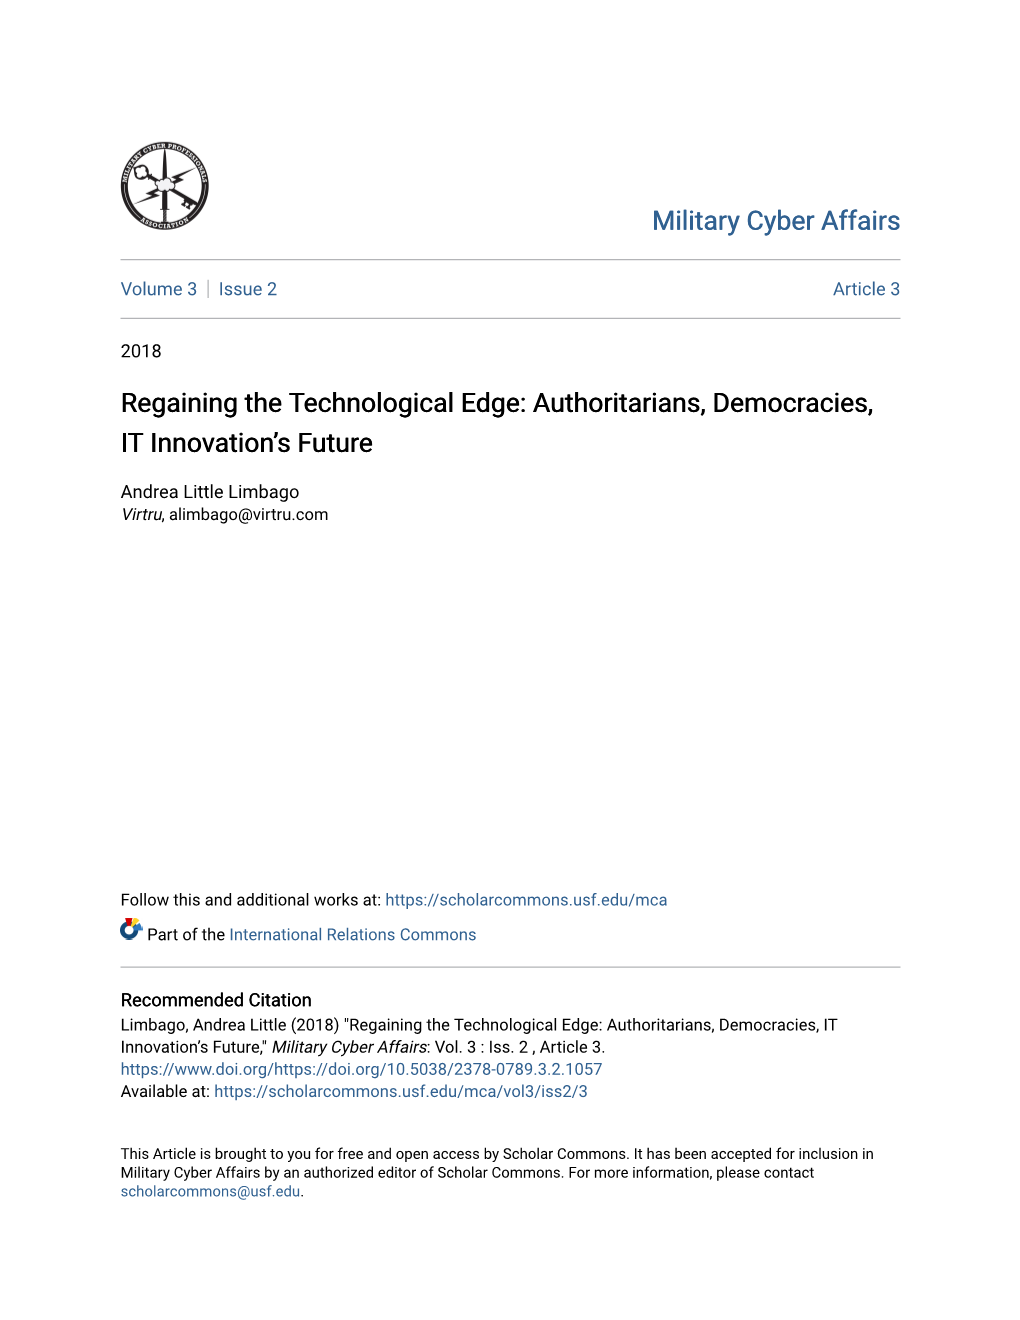 Regaining the Technological Edge: Authoritarians, Democracies, IT Innovation’S Future